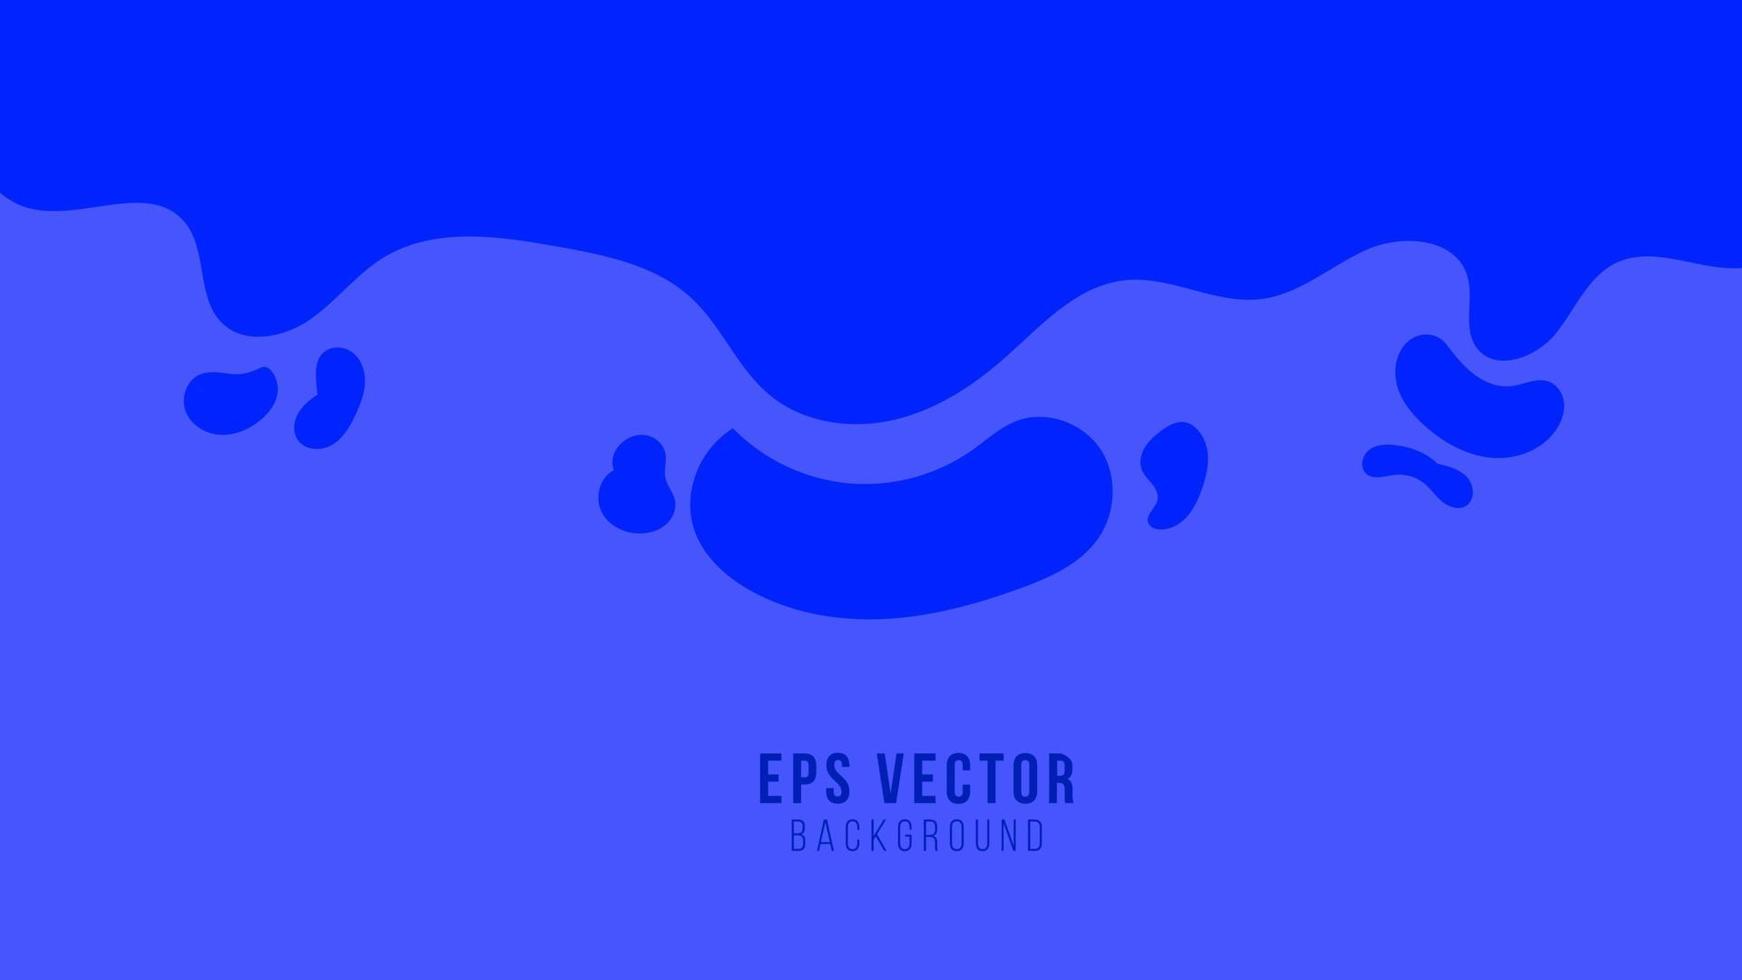 Dark blue purple wavy abstract wave shape background eps vector